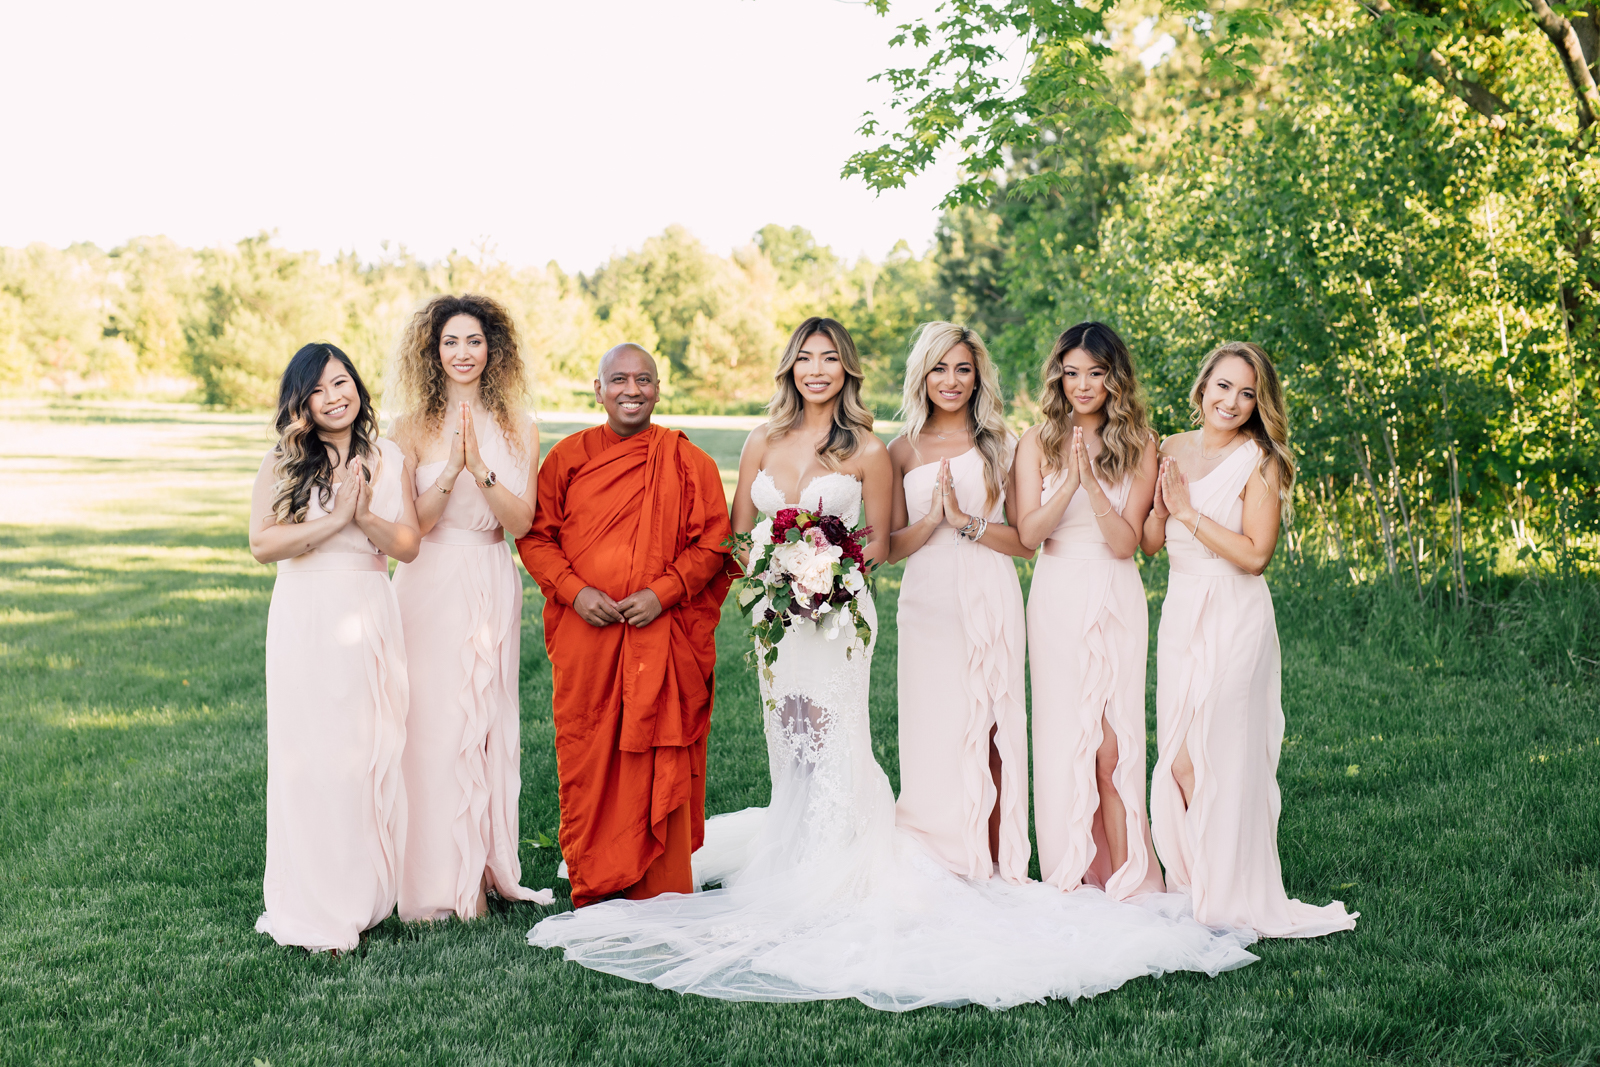 Buddhist wedding